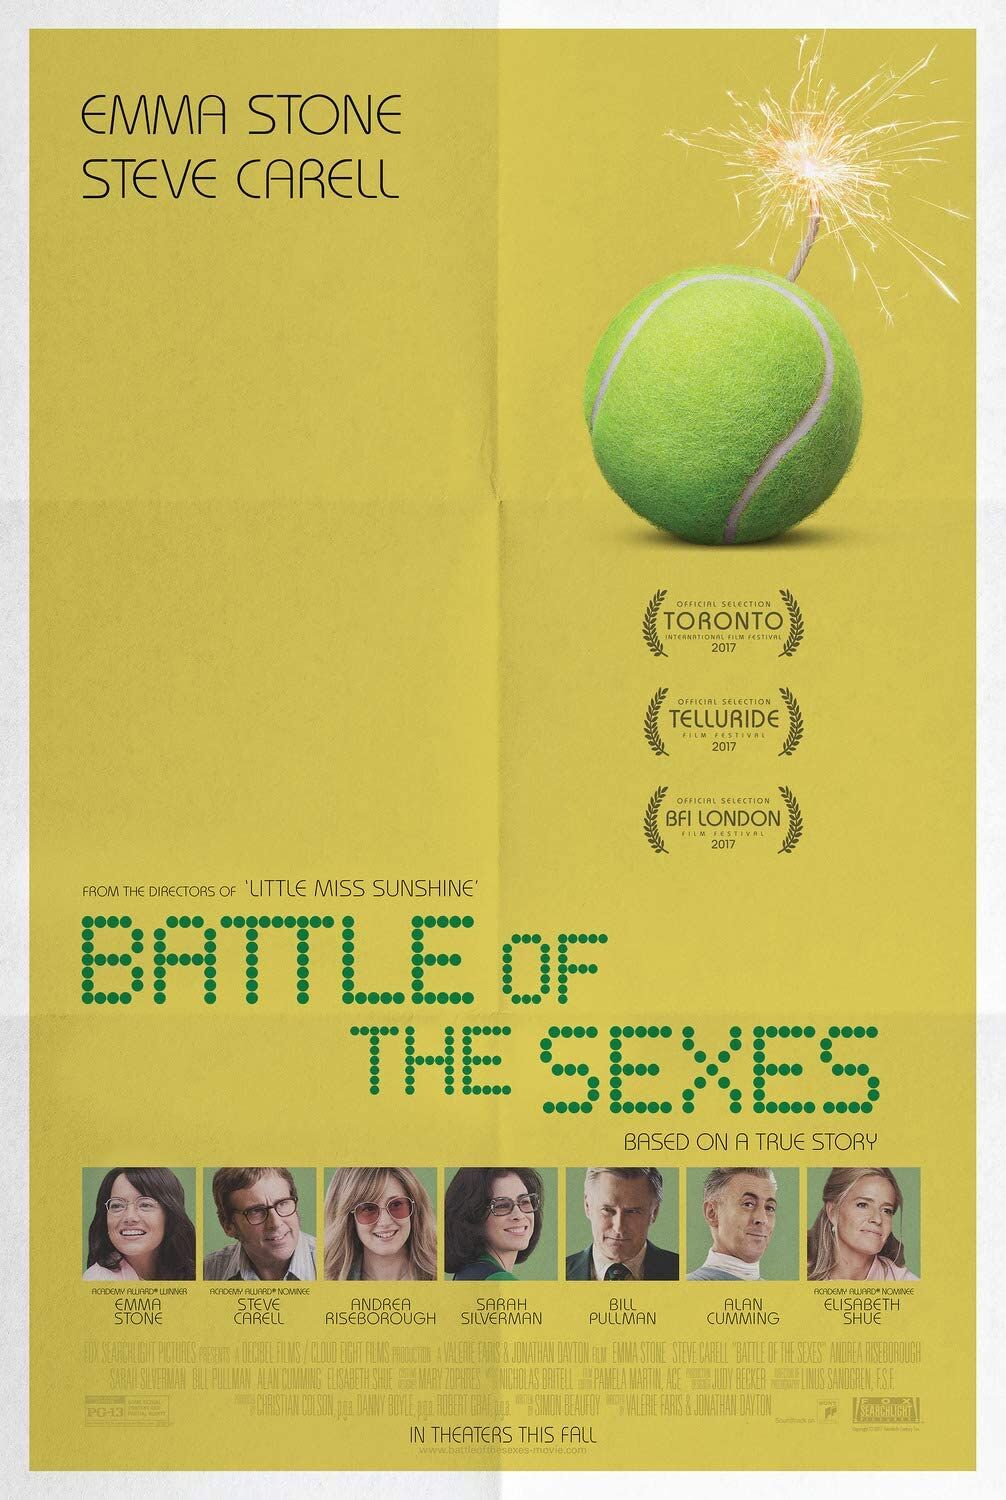 Nicholas Britell - Battle of the Sexes (Original Motion Picture